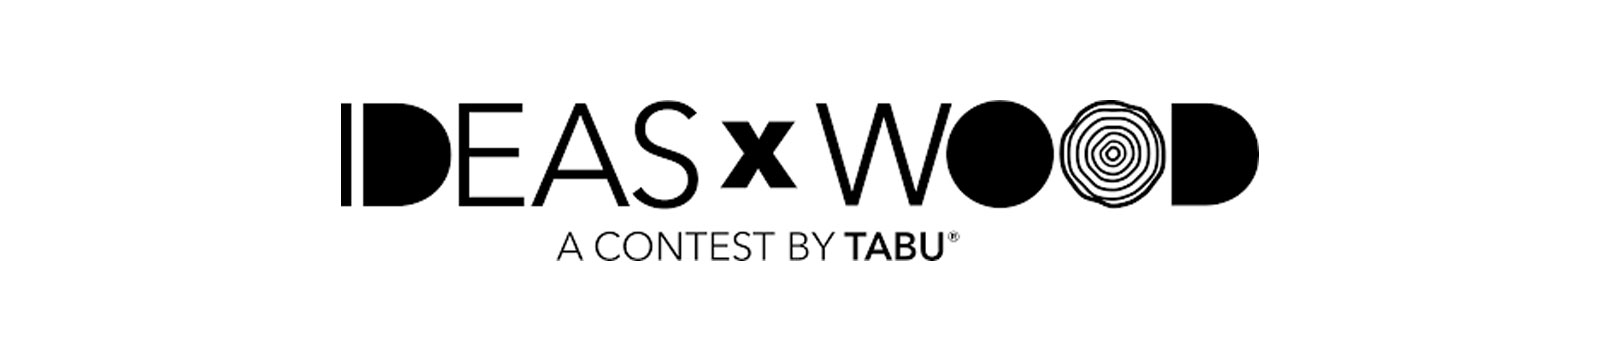 Design Contest IDEASxWOOD 2020/2021